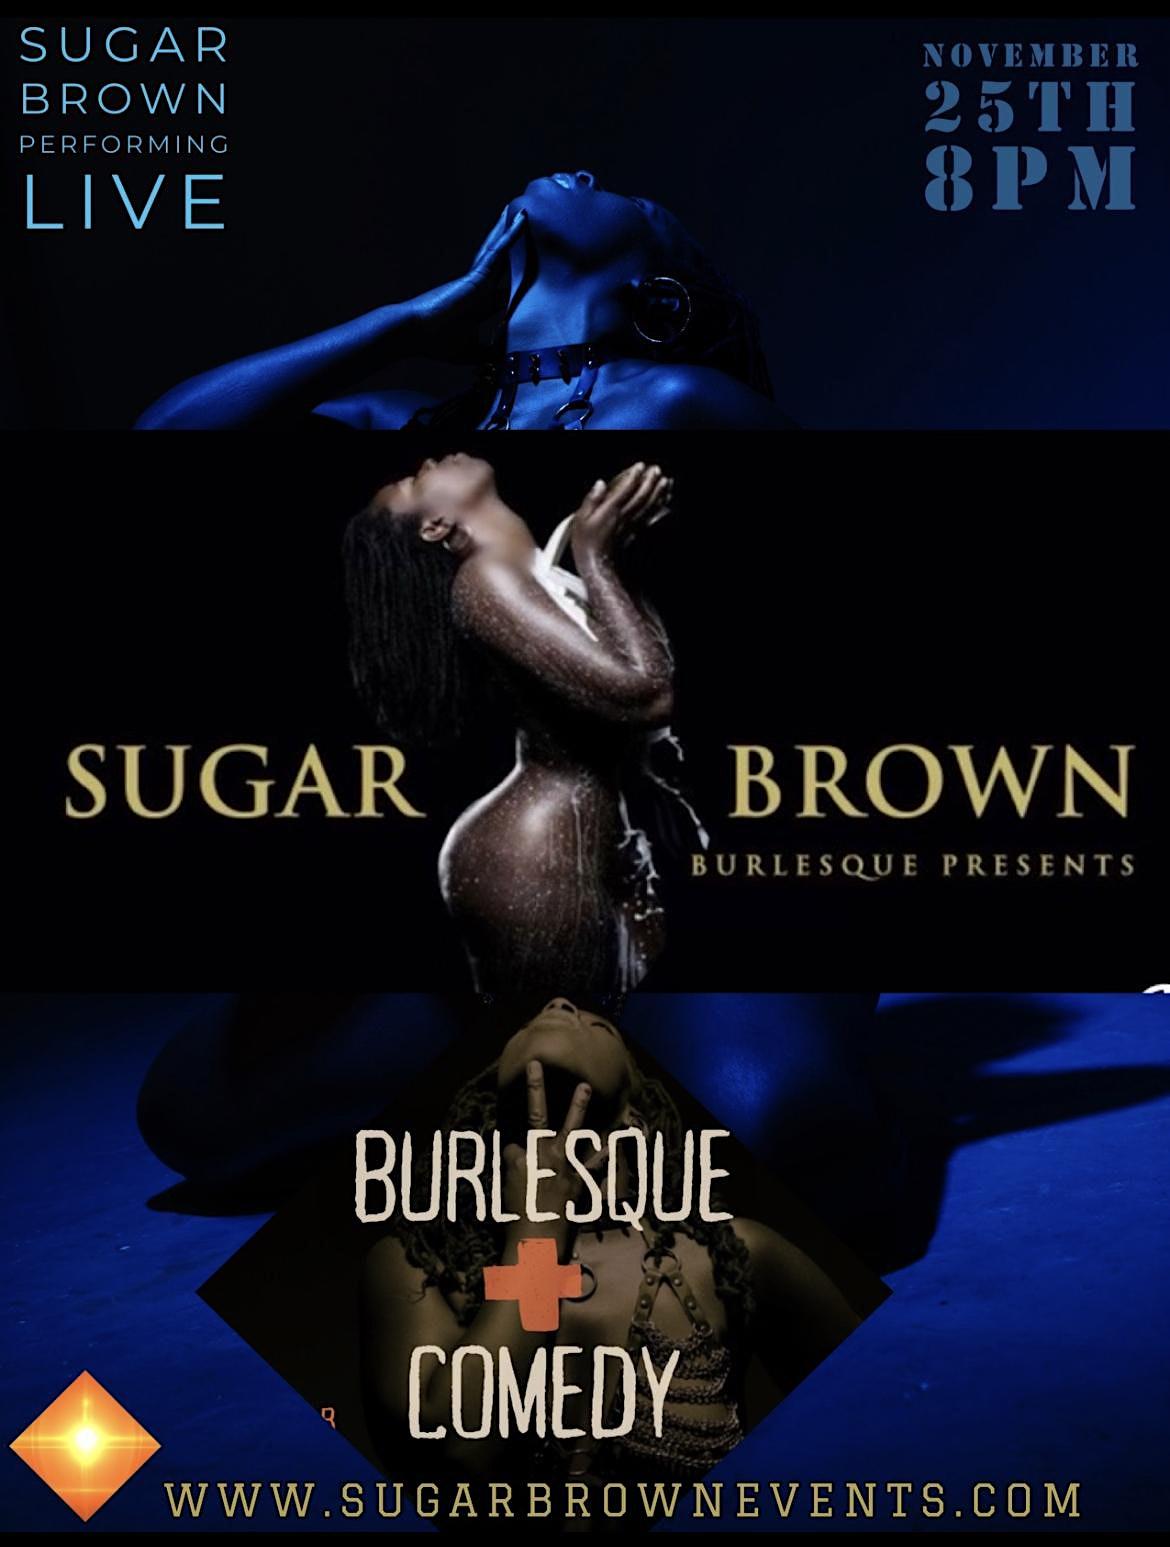 Sugar Brown Burlesque presents: Bad & Bougie Comedy Tampa